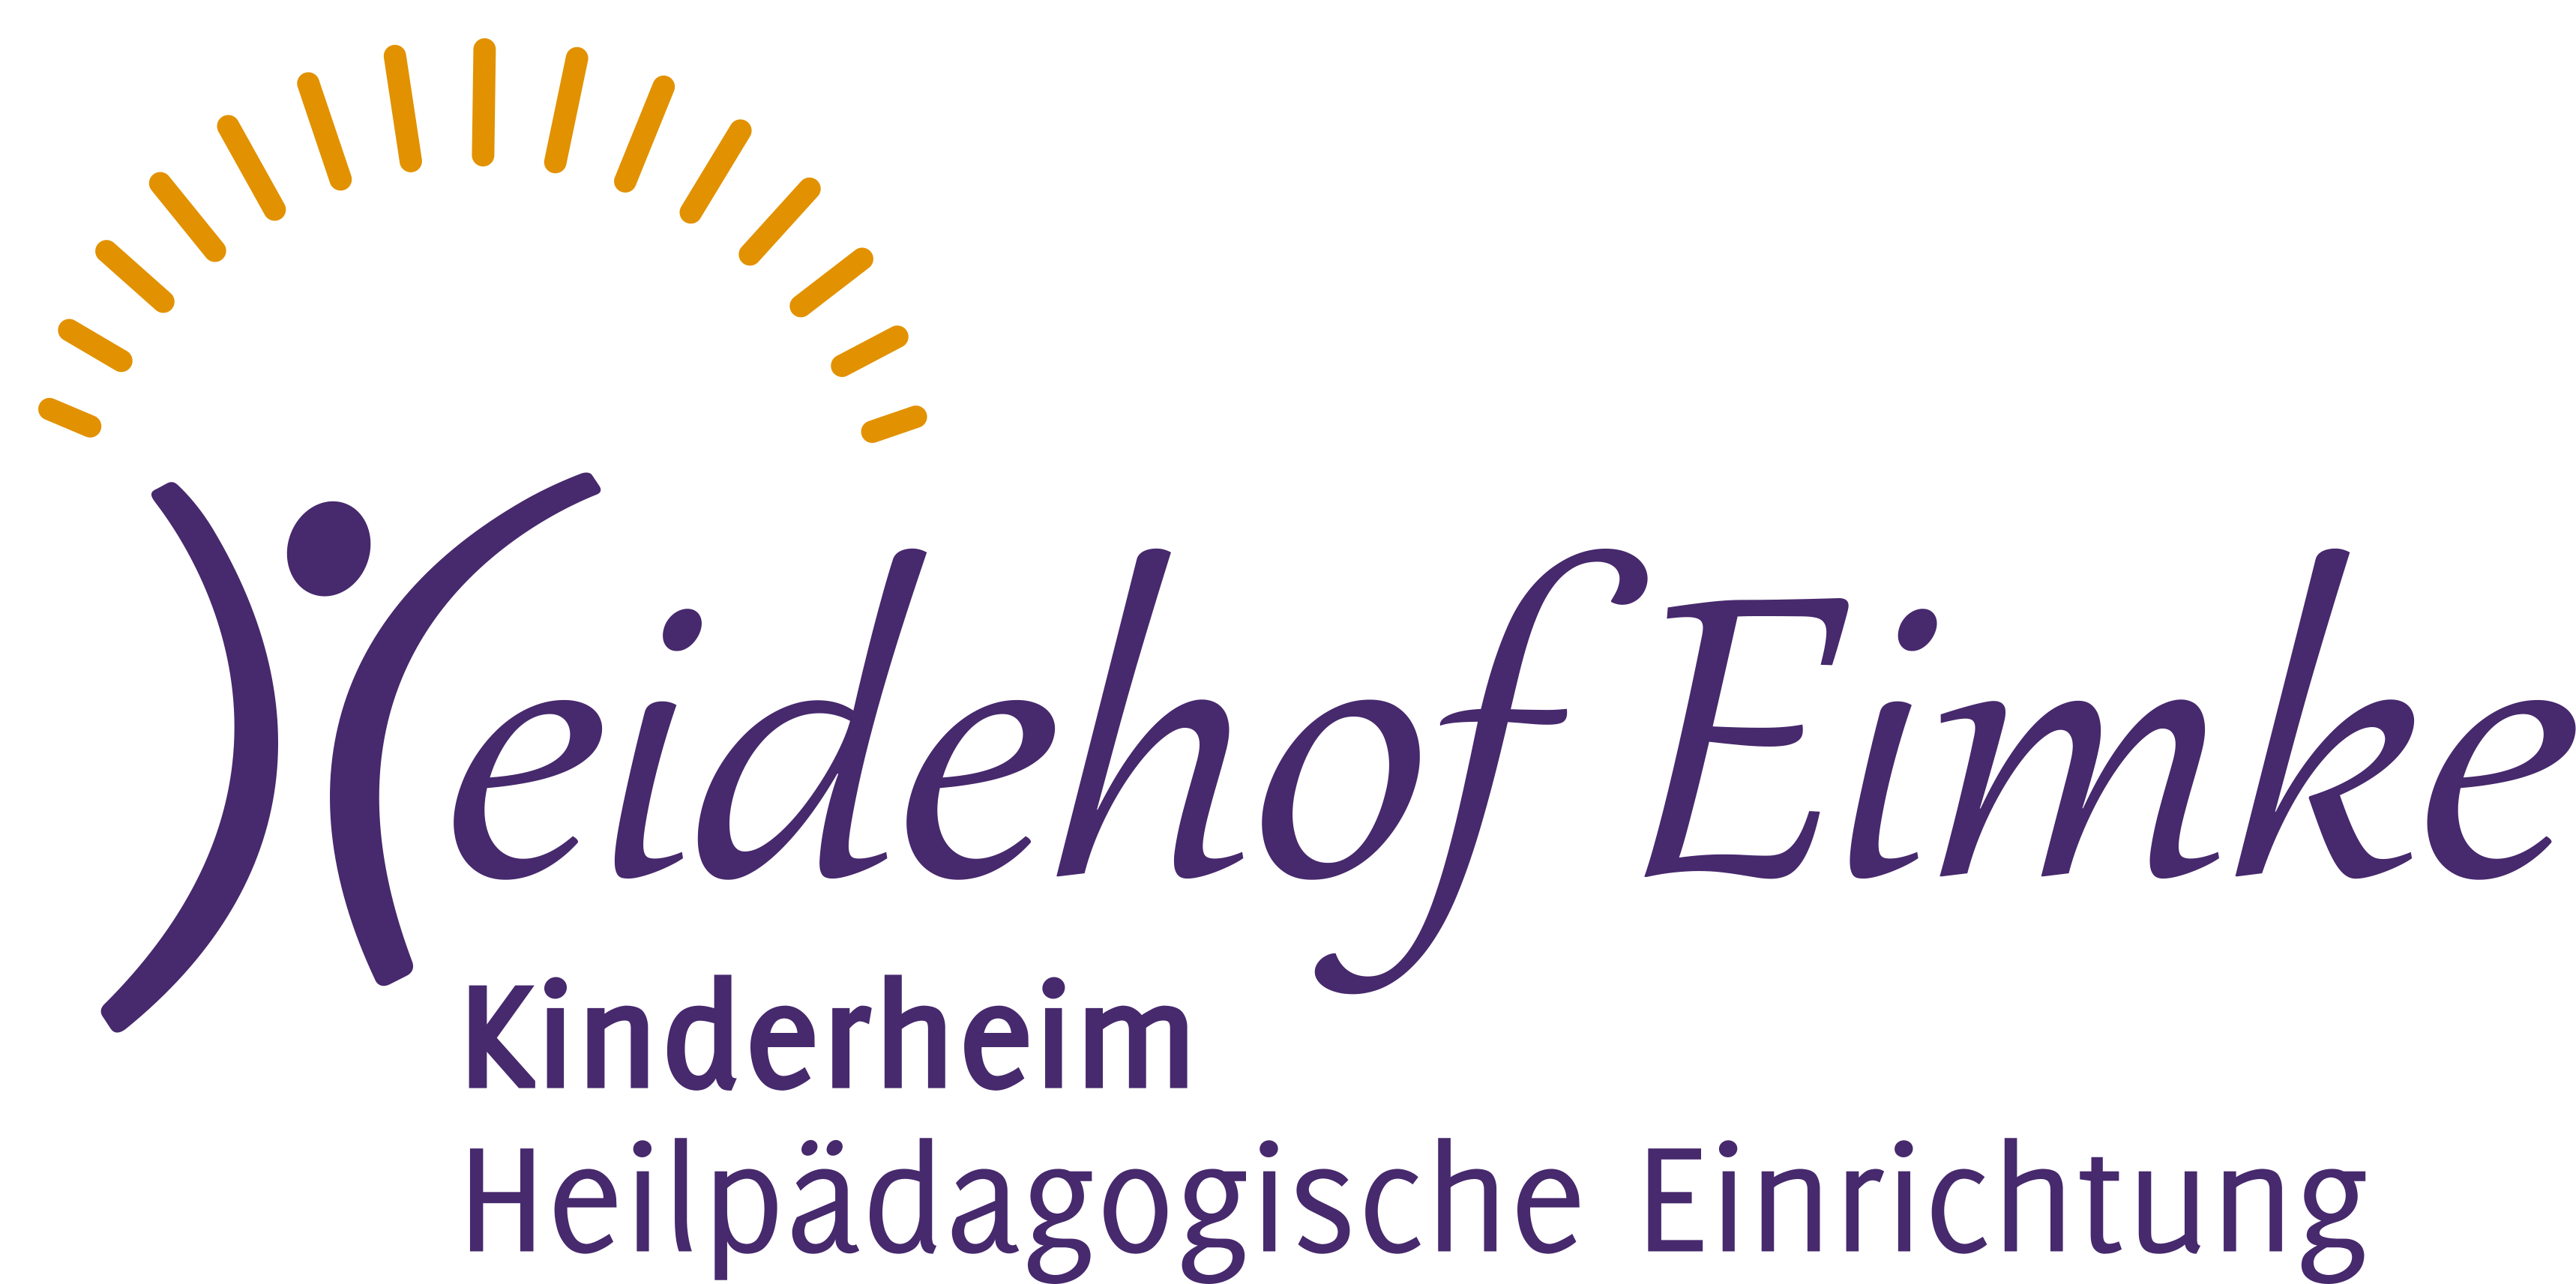 Logo Heidehof Eimke